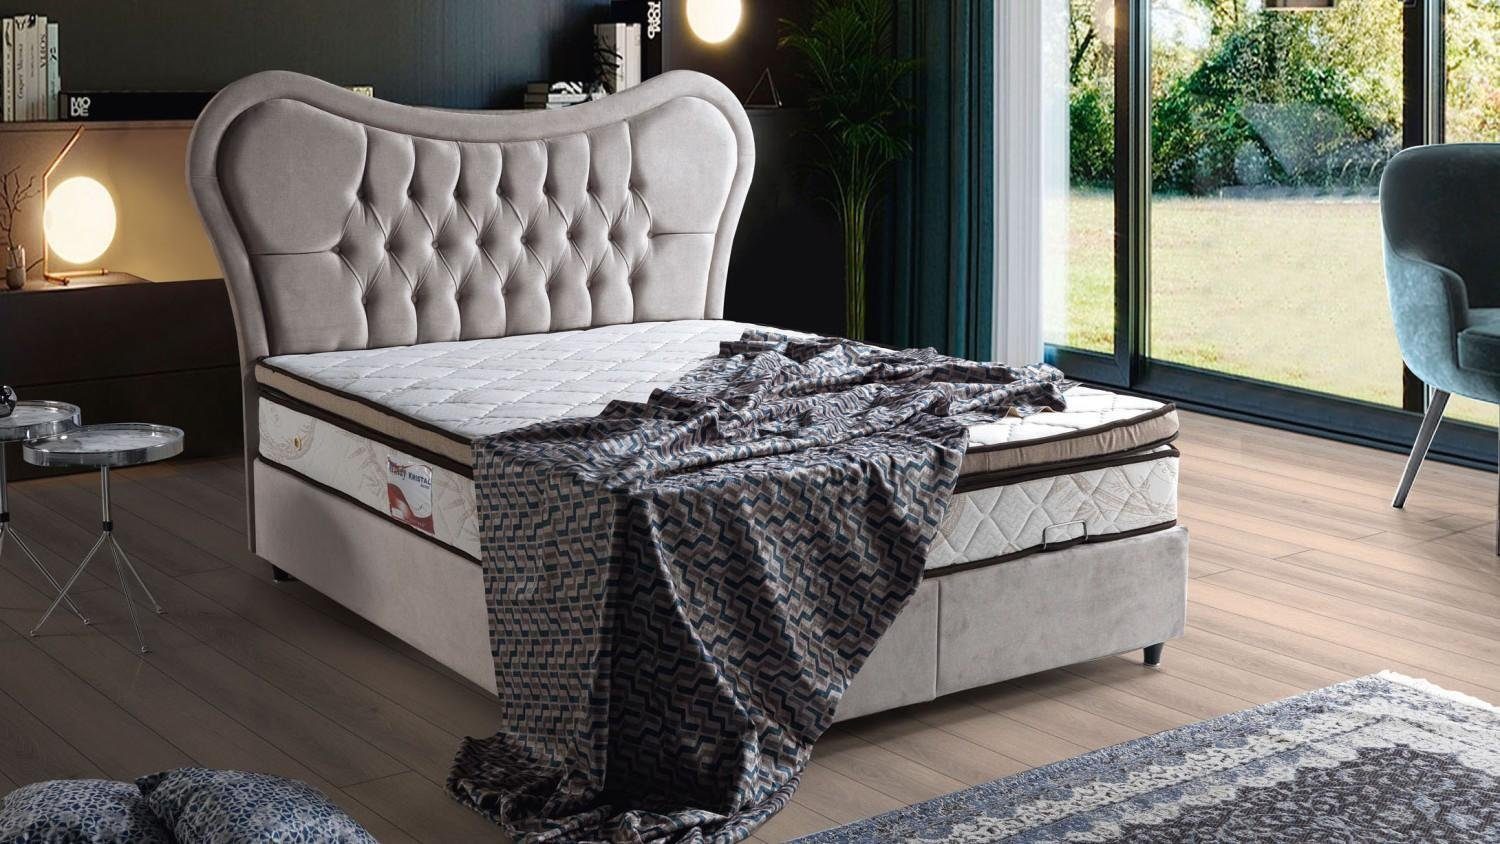 JVmoebel Bett Bett Design Betten Luxus Beige Polster Schlafzimmer Möbel Chesterfield (Made In Europe), Made In Europe